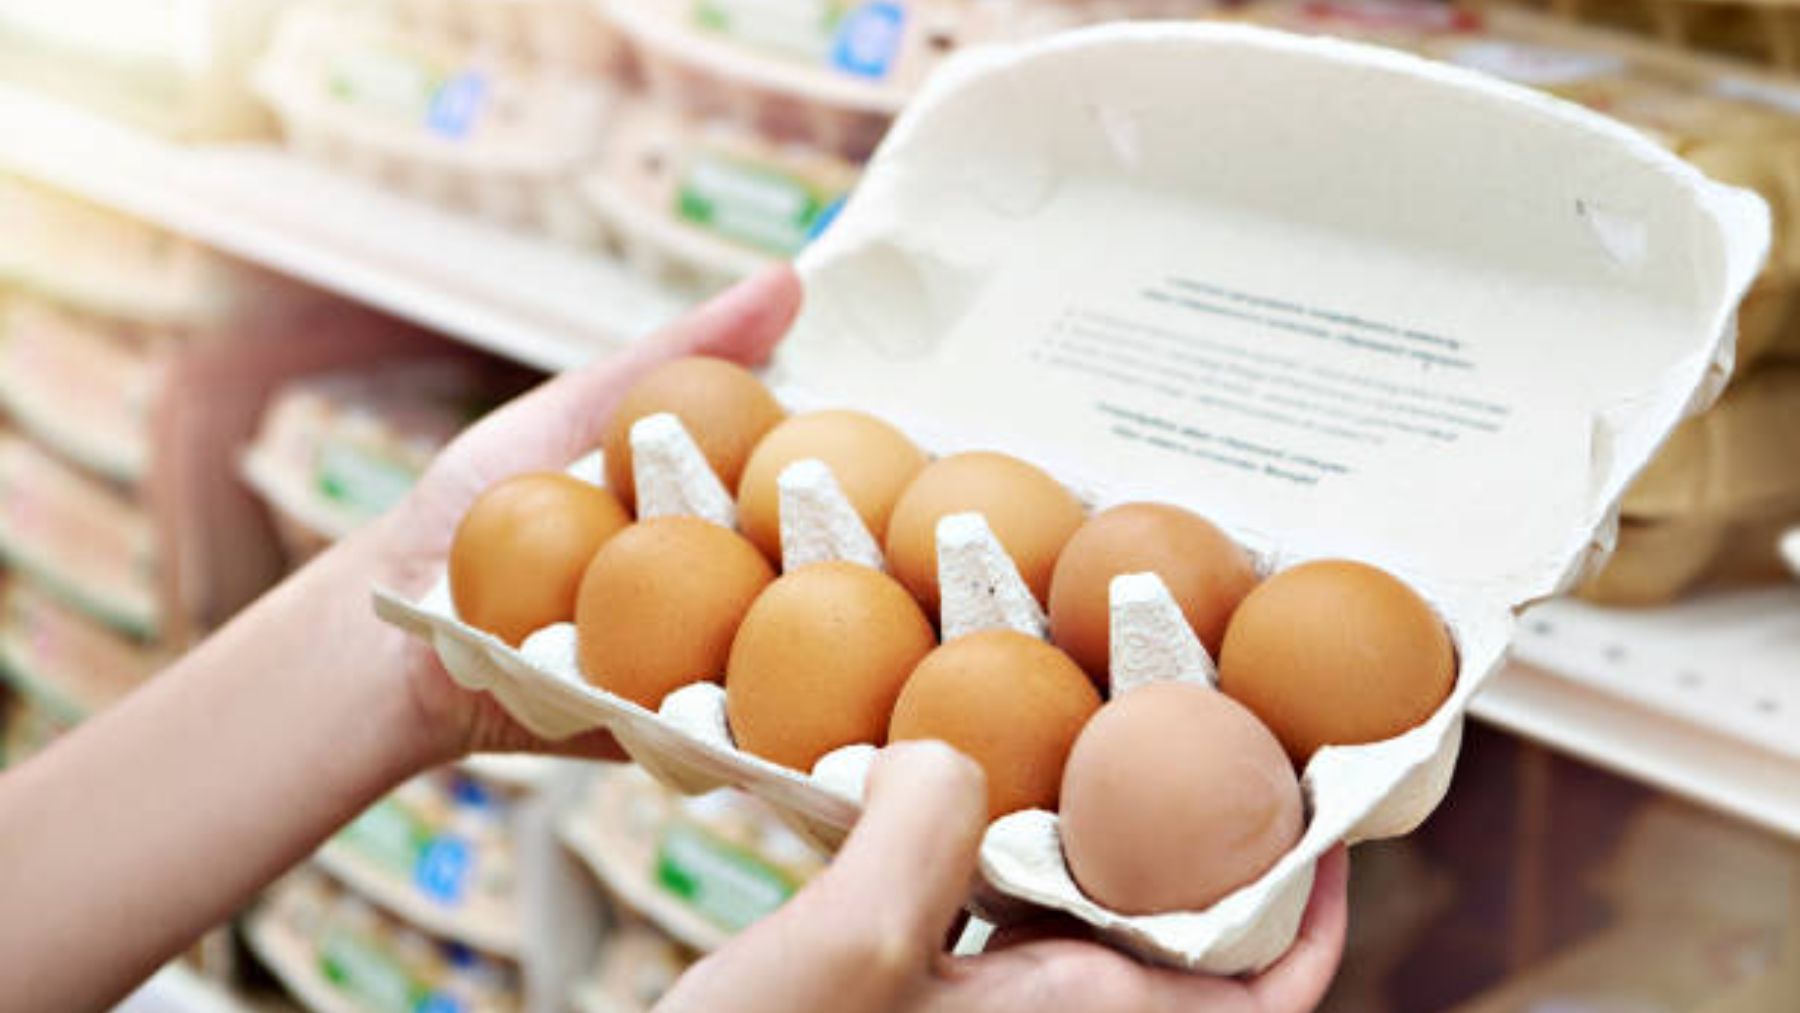 Huevos en un supermercado.